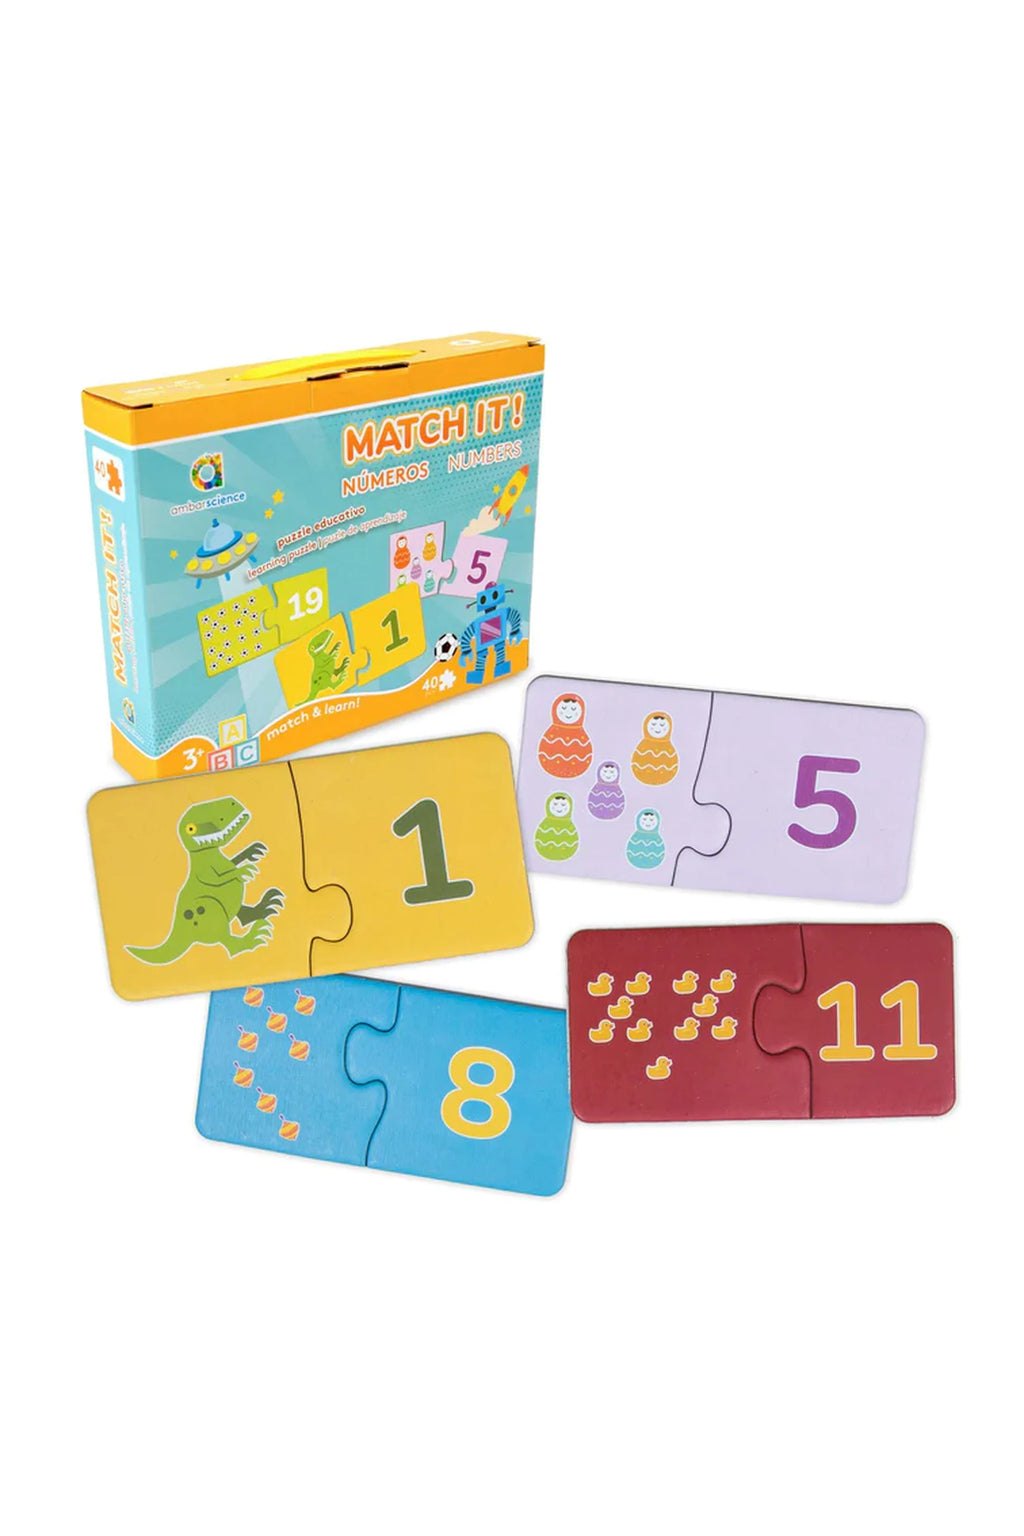 Matematicando - 6 Jogos - Ambar Science - Jogos Didáticos - Compra